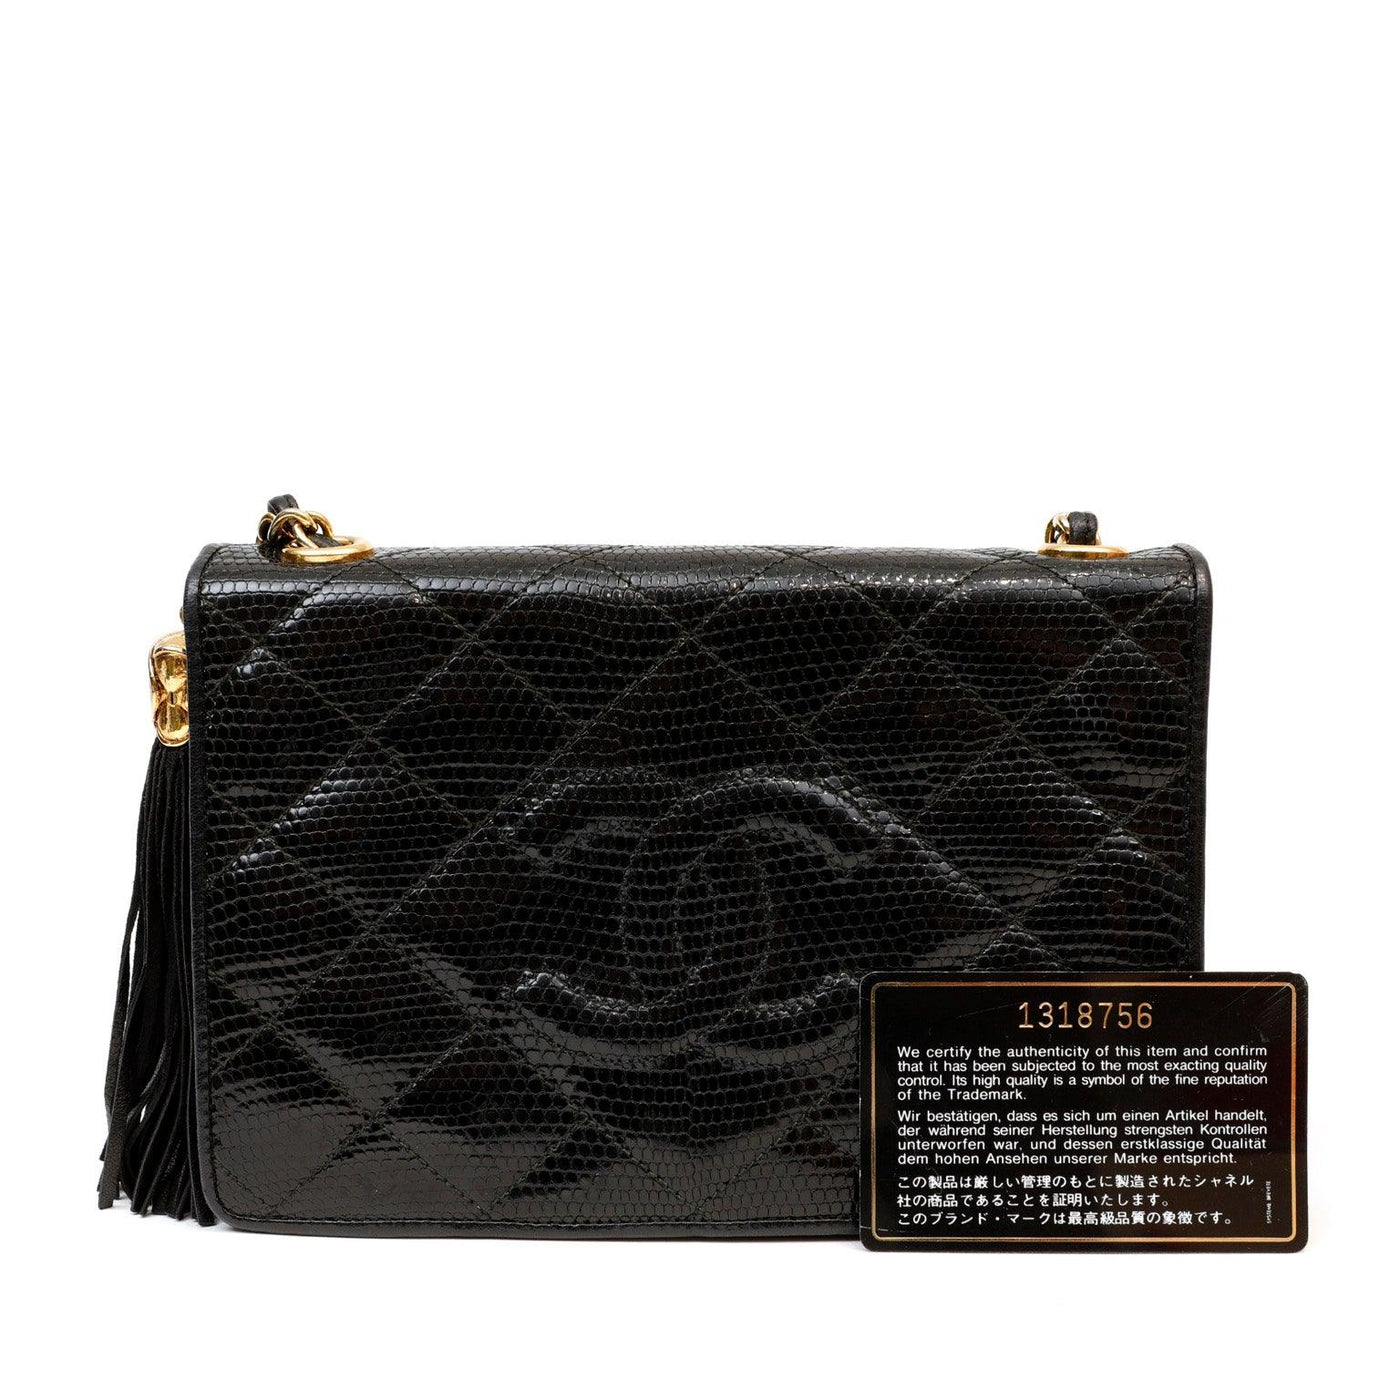 Chanel Vintage Black Lizard Crossbody Tassel Bag - Only Authentics